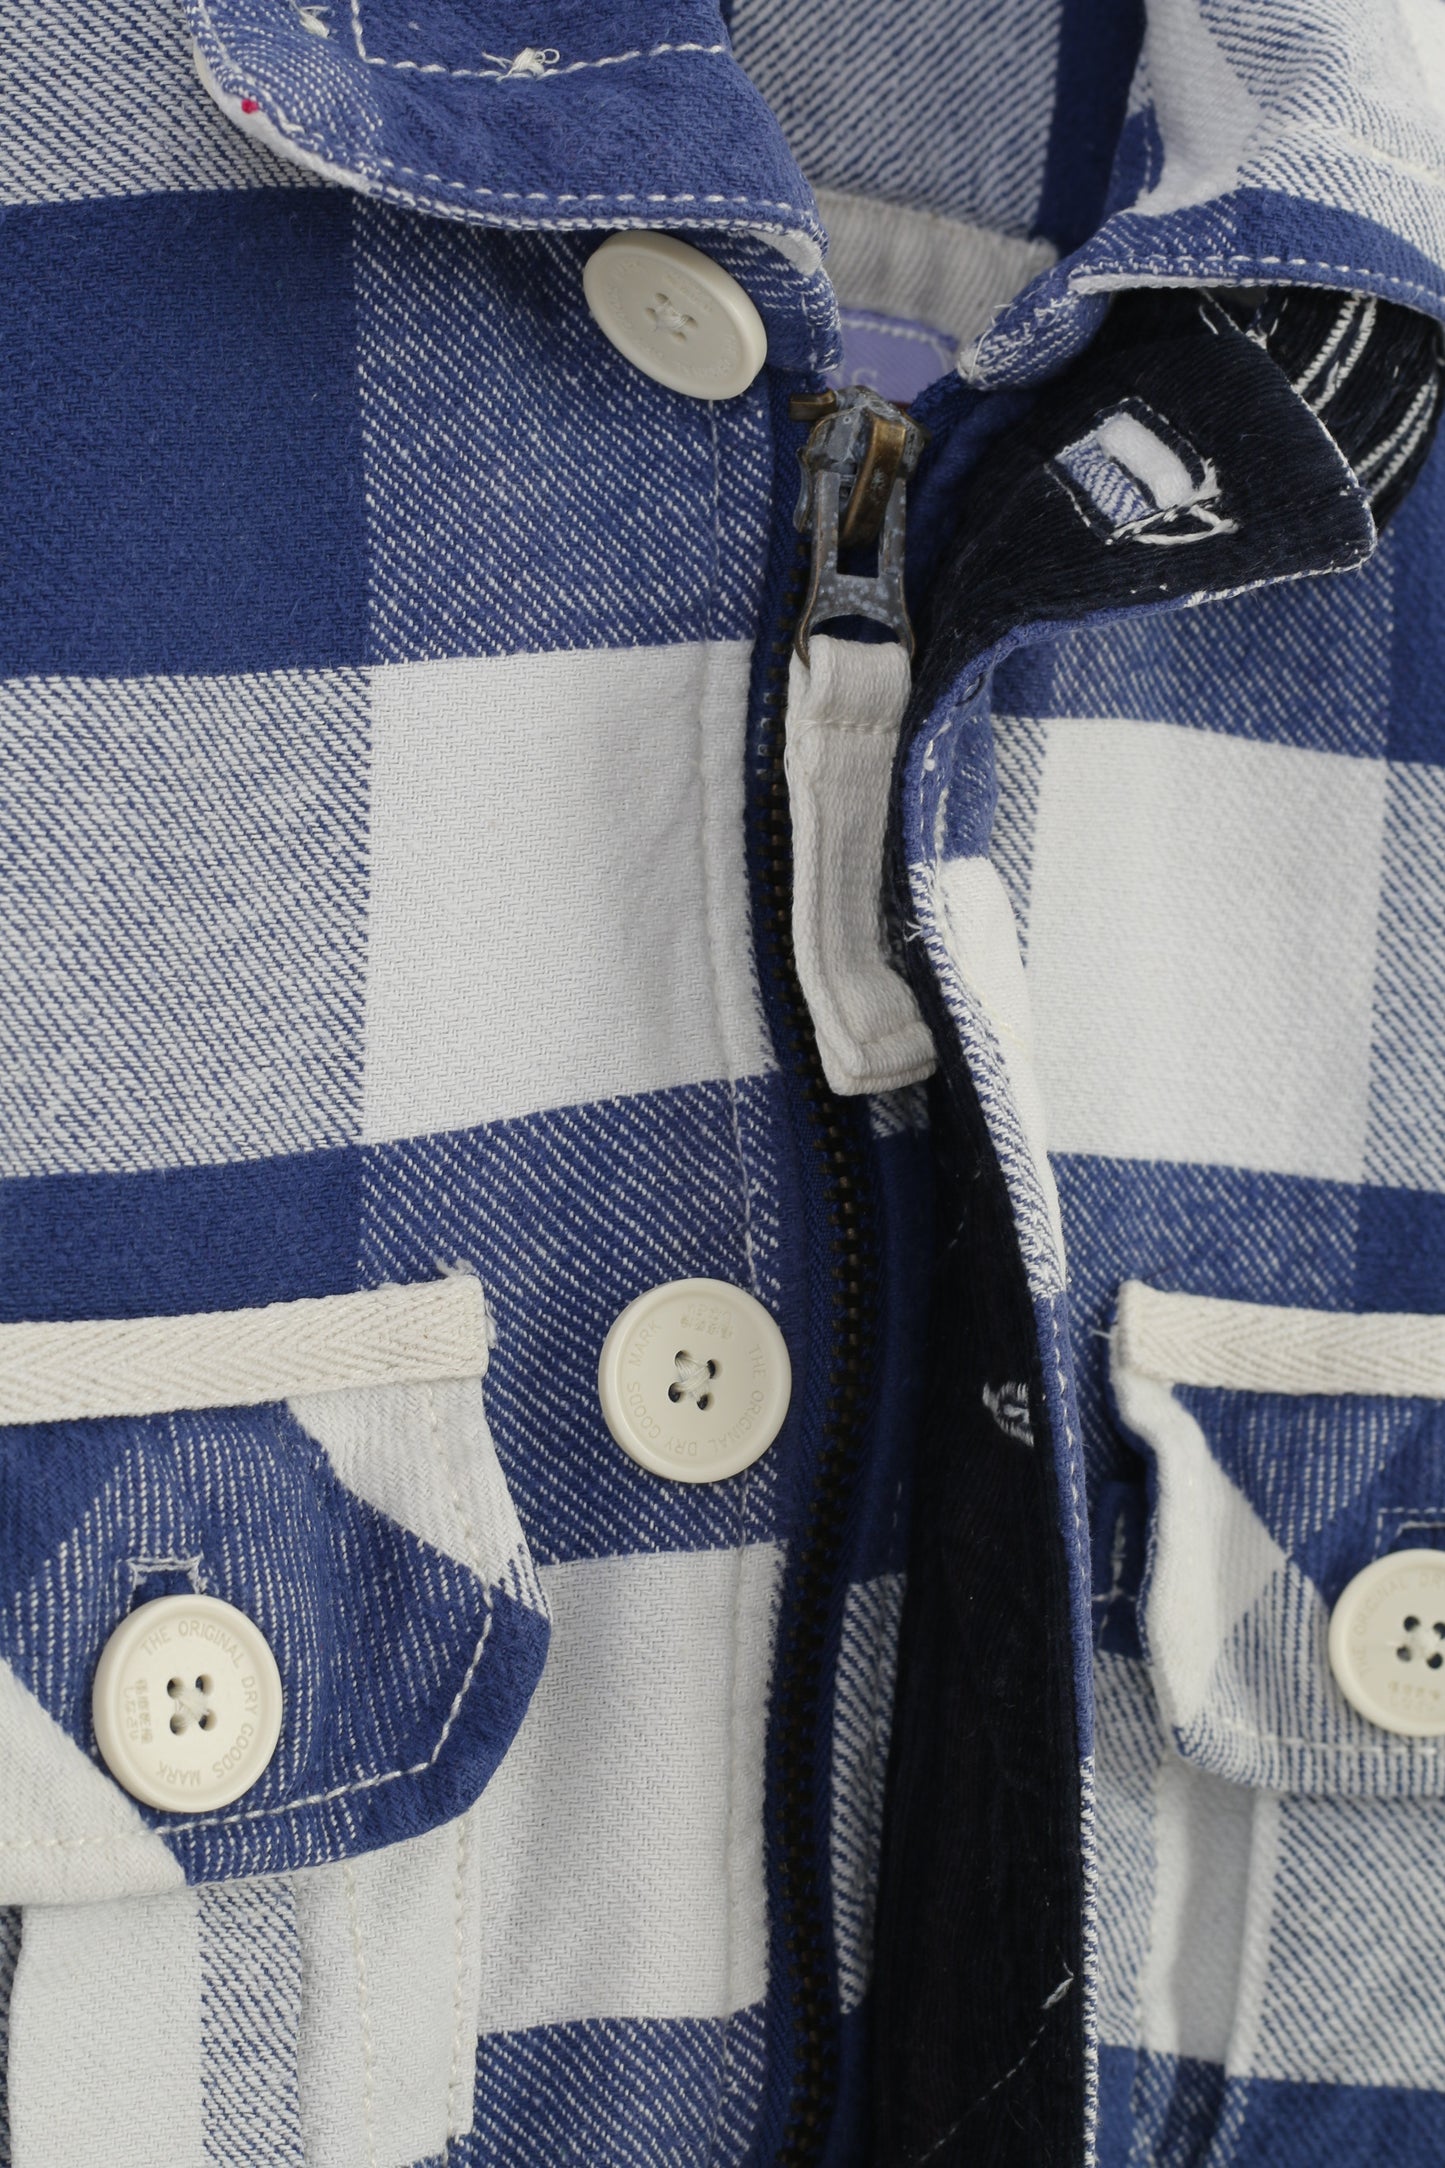 Superdry Men S Jacket Checkered Blue White Cotton Full Zipper Bottoms Western Shirt Company Mustang